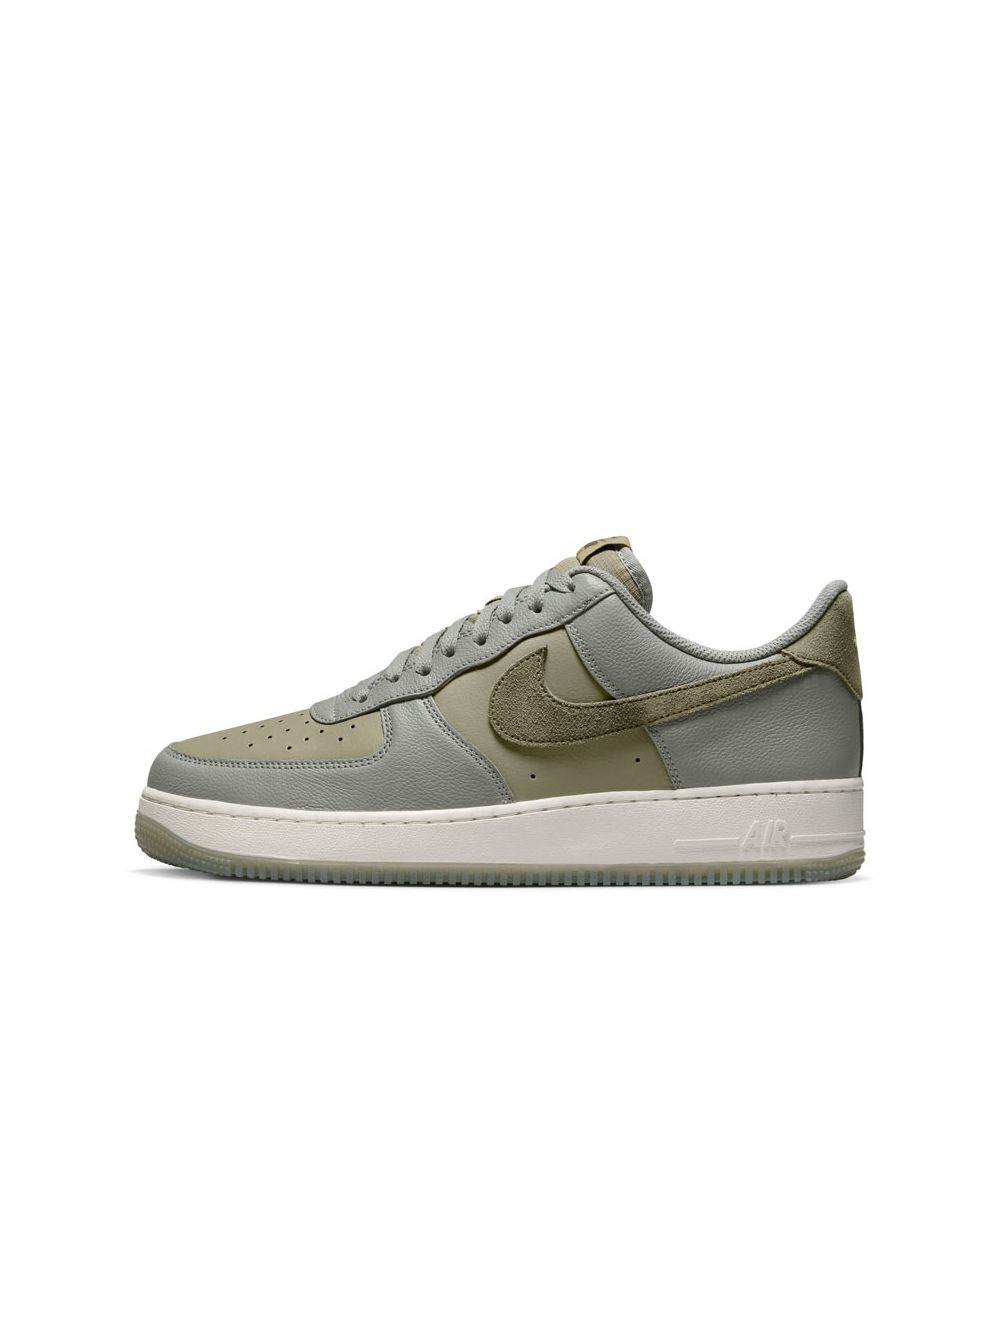 Shop Nike Air Force 1 07 LV8 Mens Shoes Dark Stucco | Studio 88